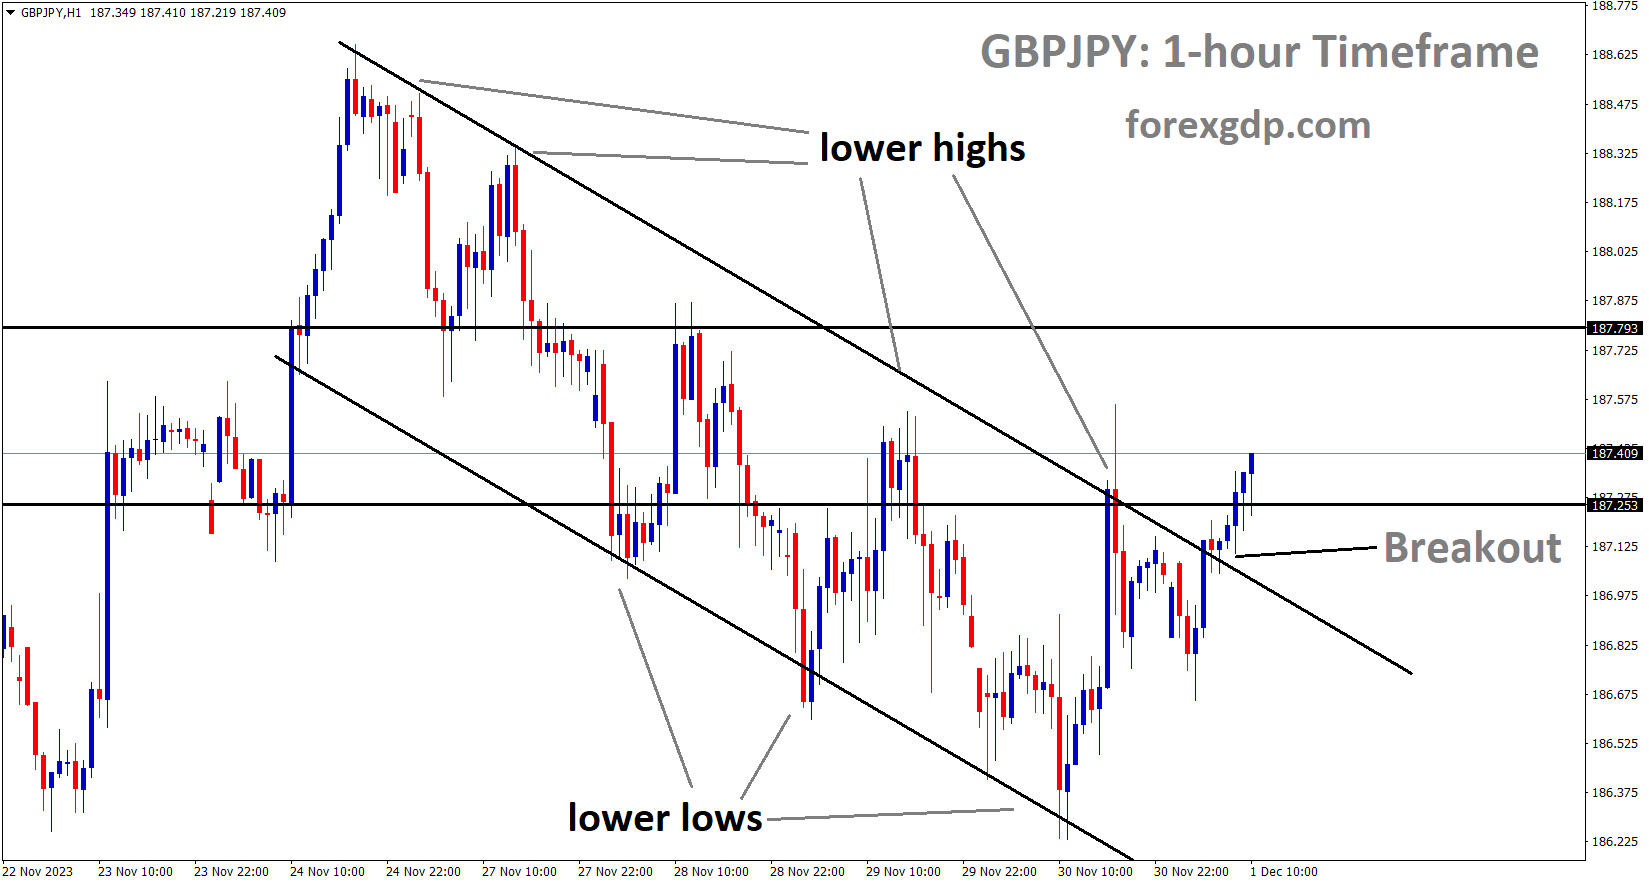 GBPJPY has broken the Descending channel in upside